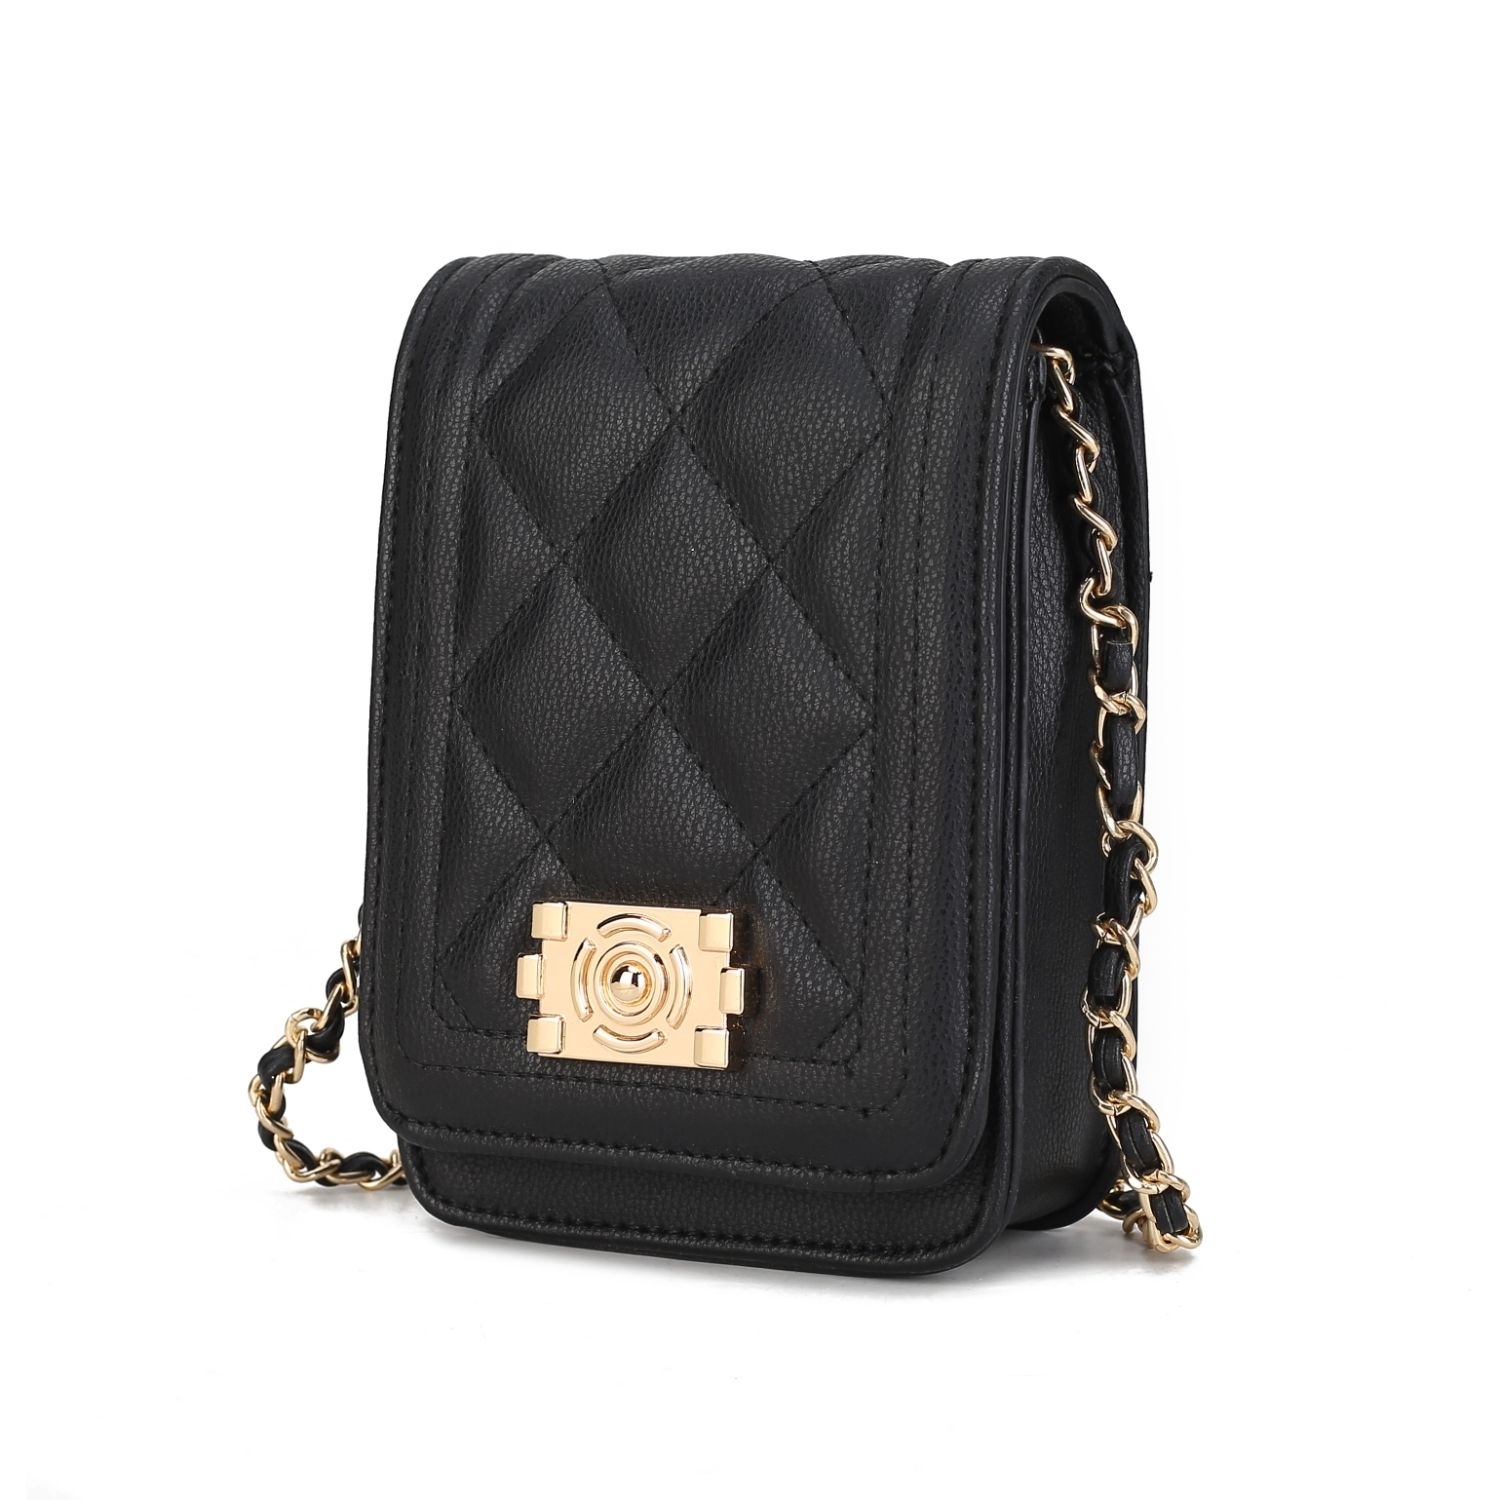 MKF Collection Gemma Crossbody Handbag By Mia K - Dark Brown